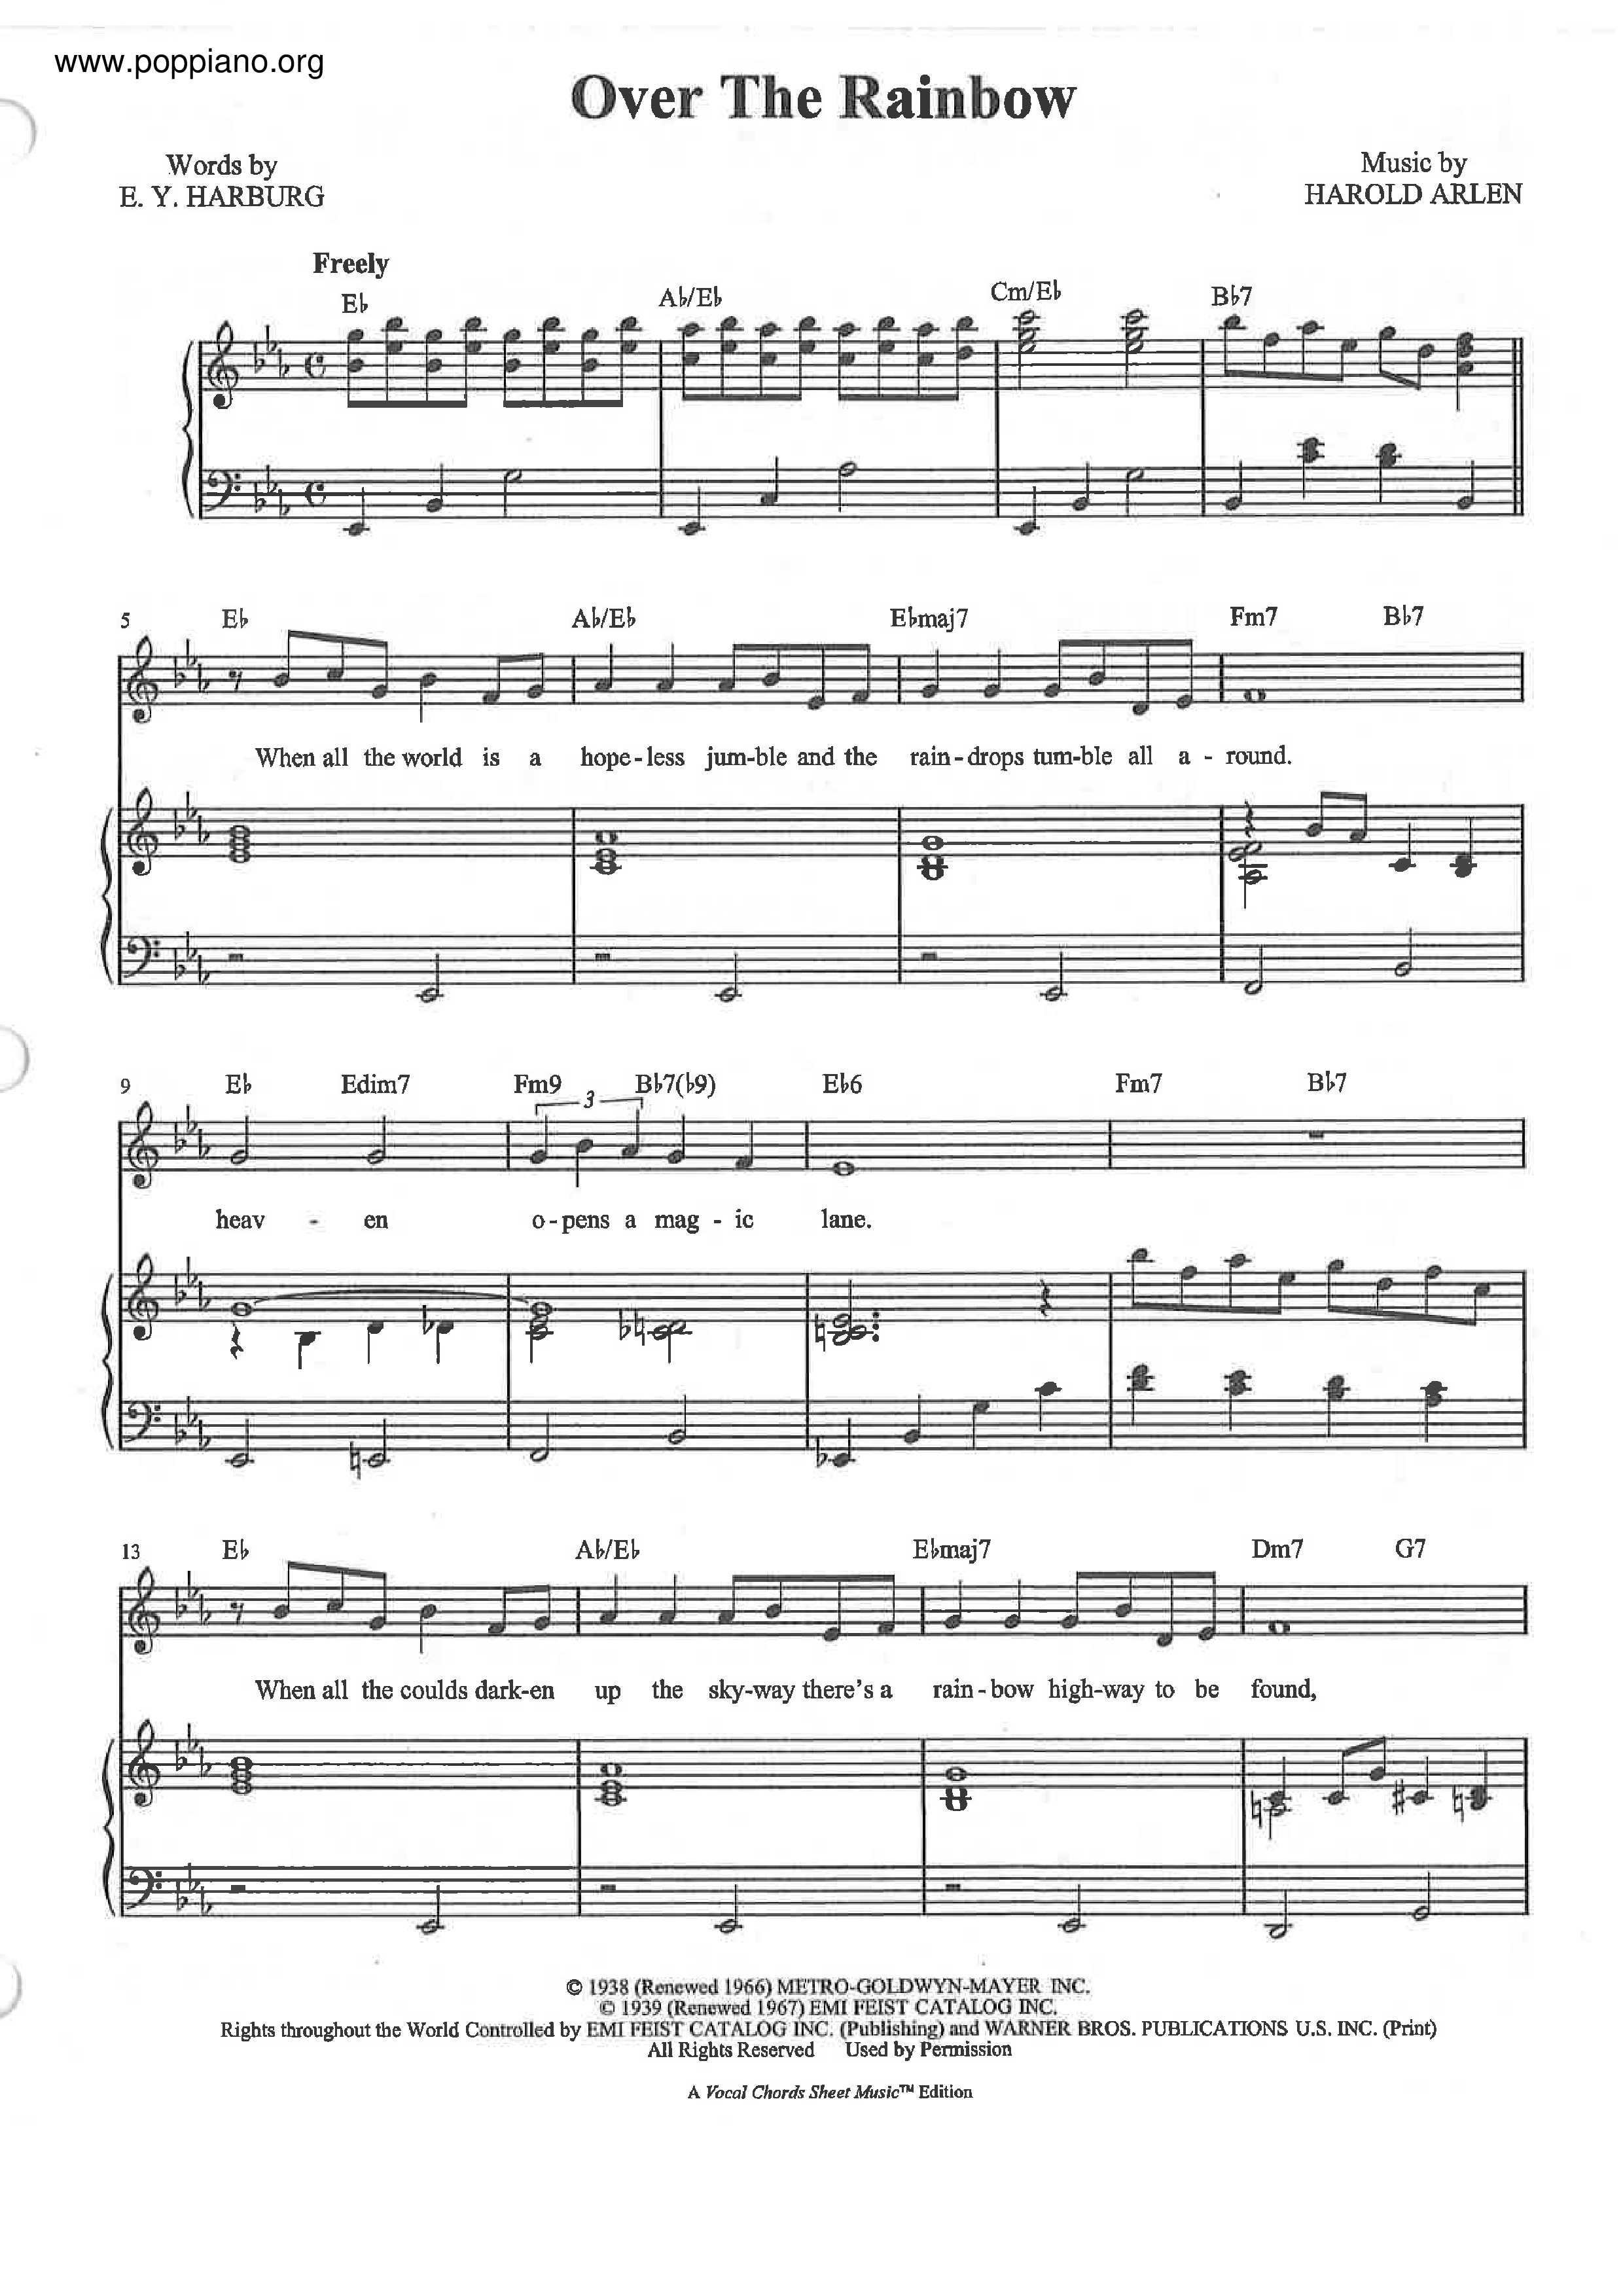 Letrista tema Neuropatía ☆ Harold Arlen-Somewhere Over The Rainbow Sheet Music pdf, - Free Score  Download ☆